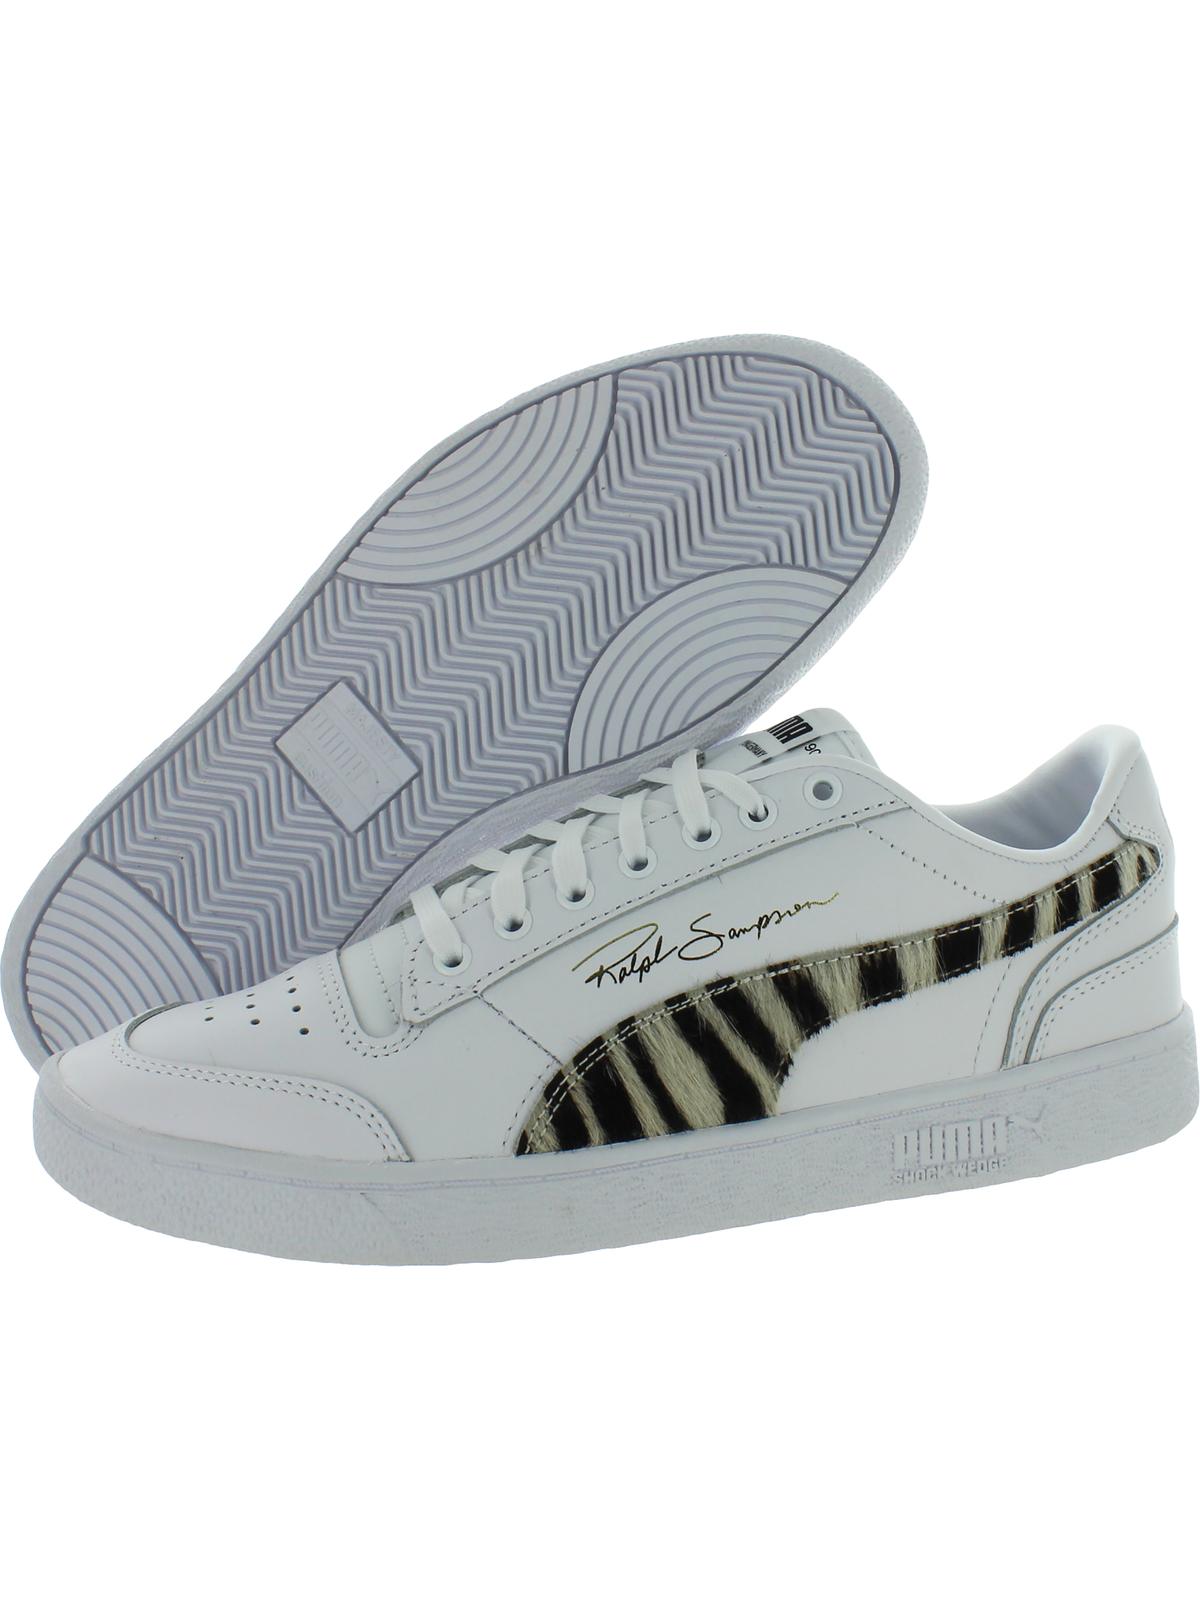 Puma Mens Ralph Sampson Lo Wild Calf Hair Fashion Sneakers White 8 Medium (D) - image 3 of 3